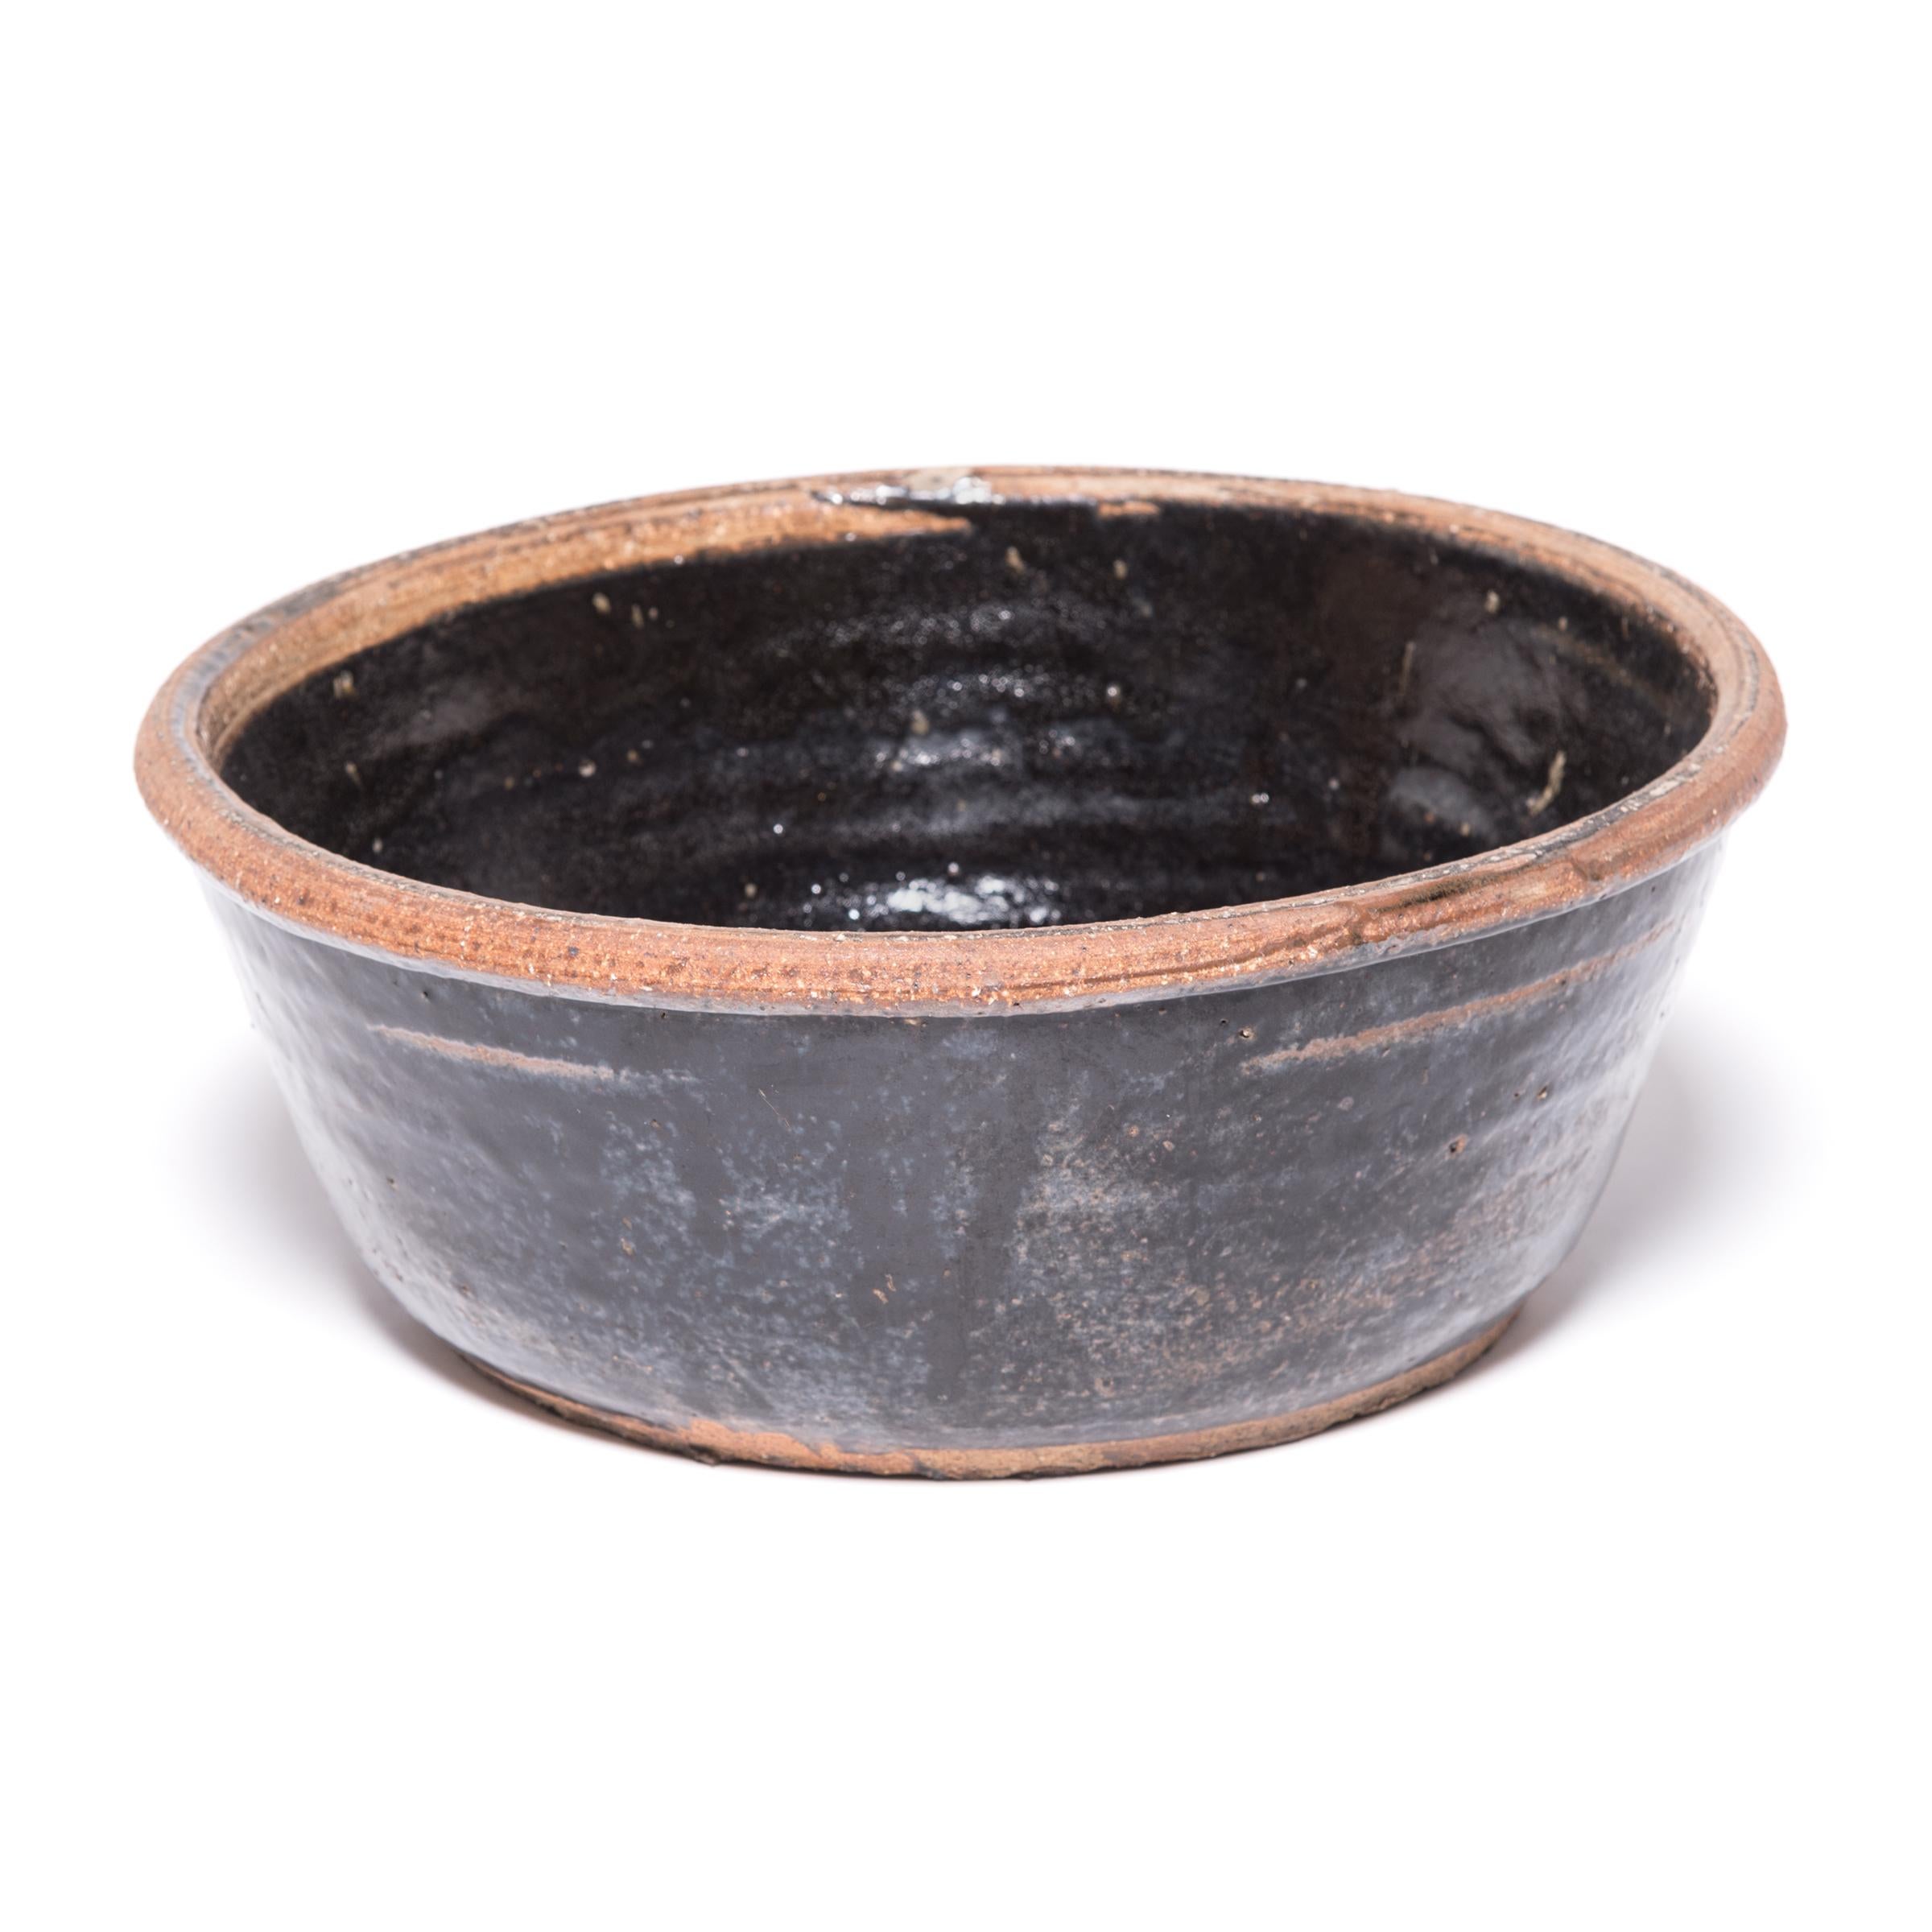 ancient coil pots